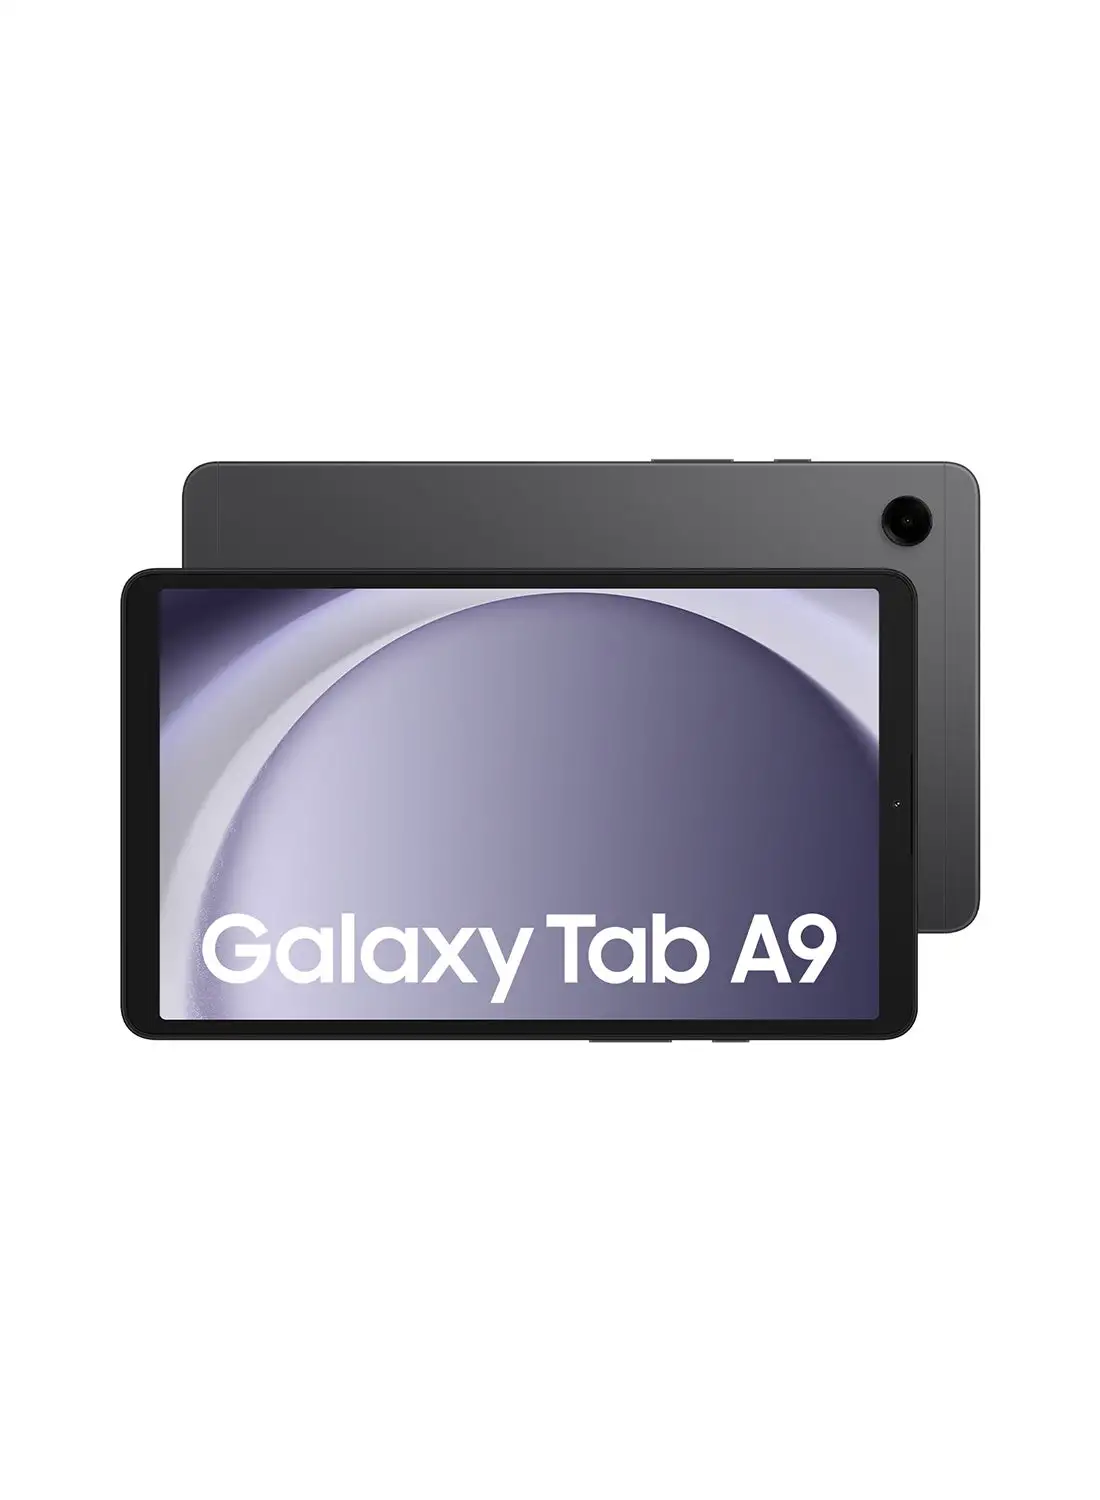 Samsung Galaxy Tab A9 Graphite 4GB RAM 64GB LTE - Middle East Version